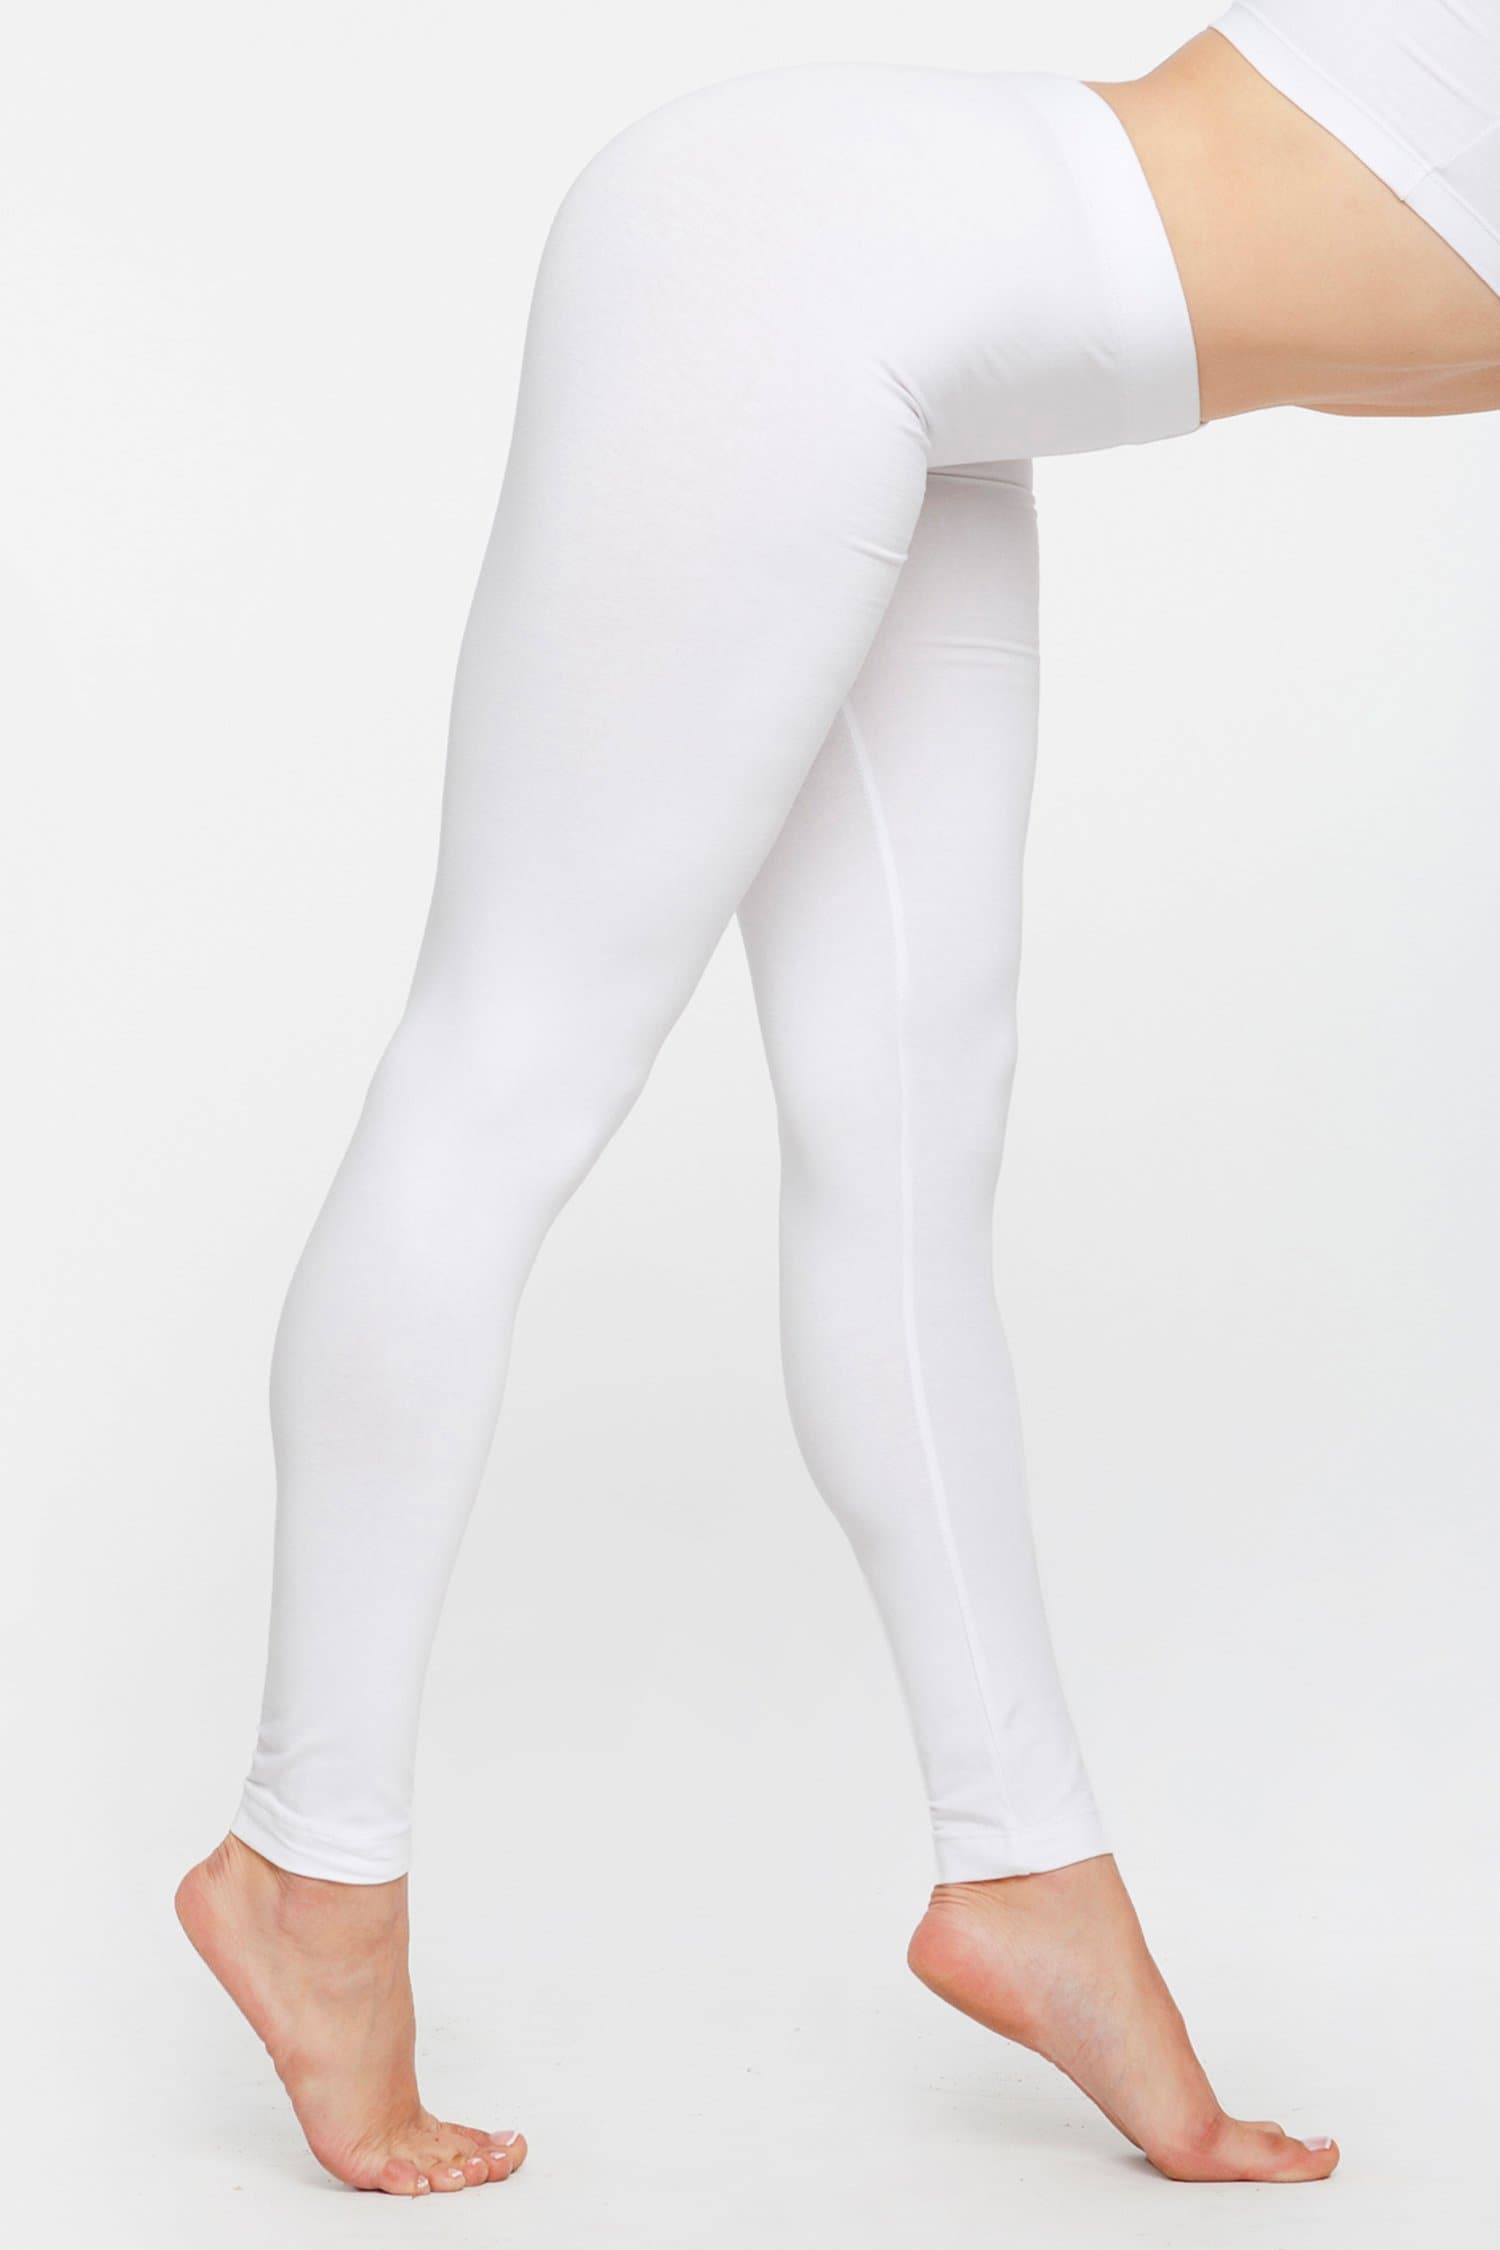 Elastic Waist Full Length 4 Way Stretchable Cotton Lycra Leggings - White -  Tito's Fashion House